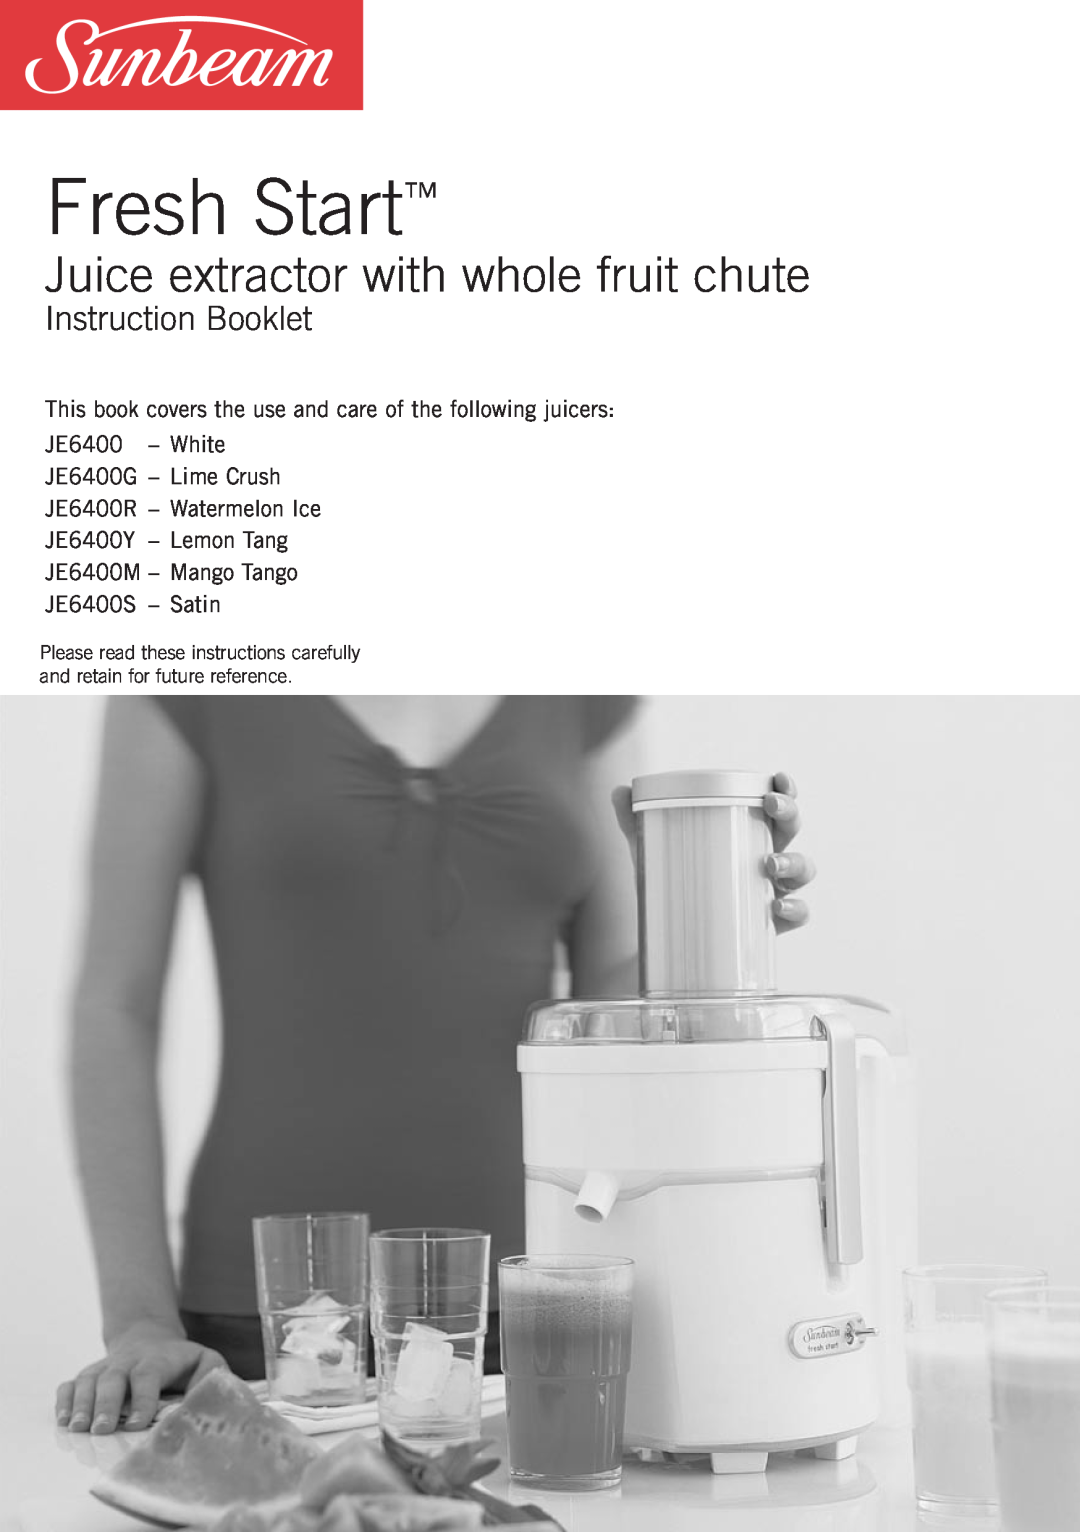 Sunbeam JE6400S, JE6400M, JE6400DG, JE6400Y manual Fresh Start, Juice extractor with whole fruit chute, Instruction Booklet 